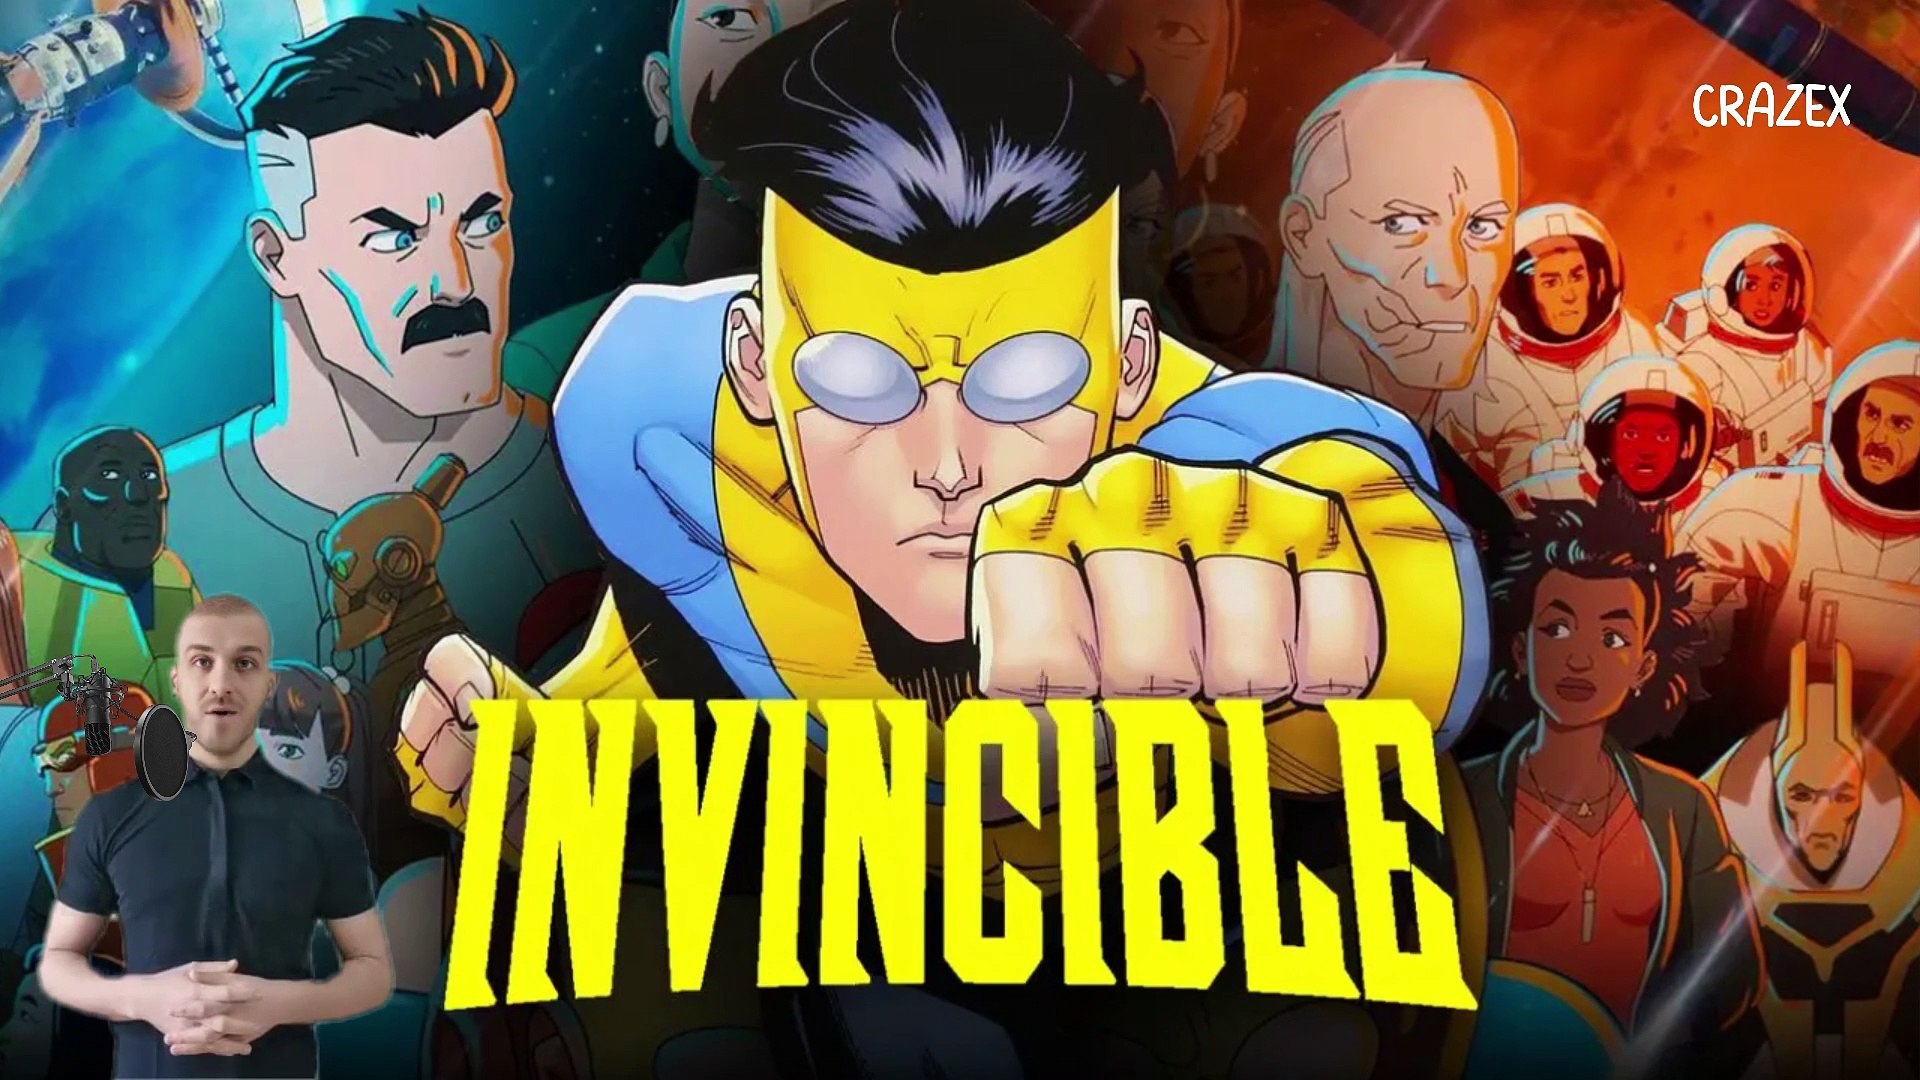 Invincible': Steven Yeun, JK Simmons, Mark Hamill & More Join